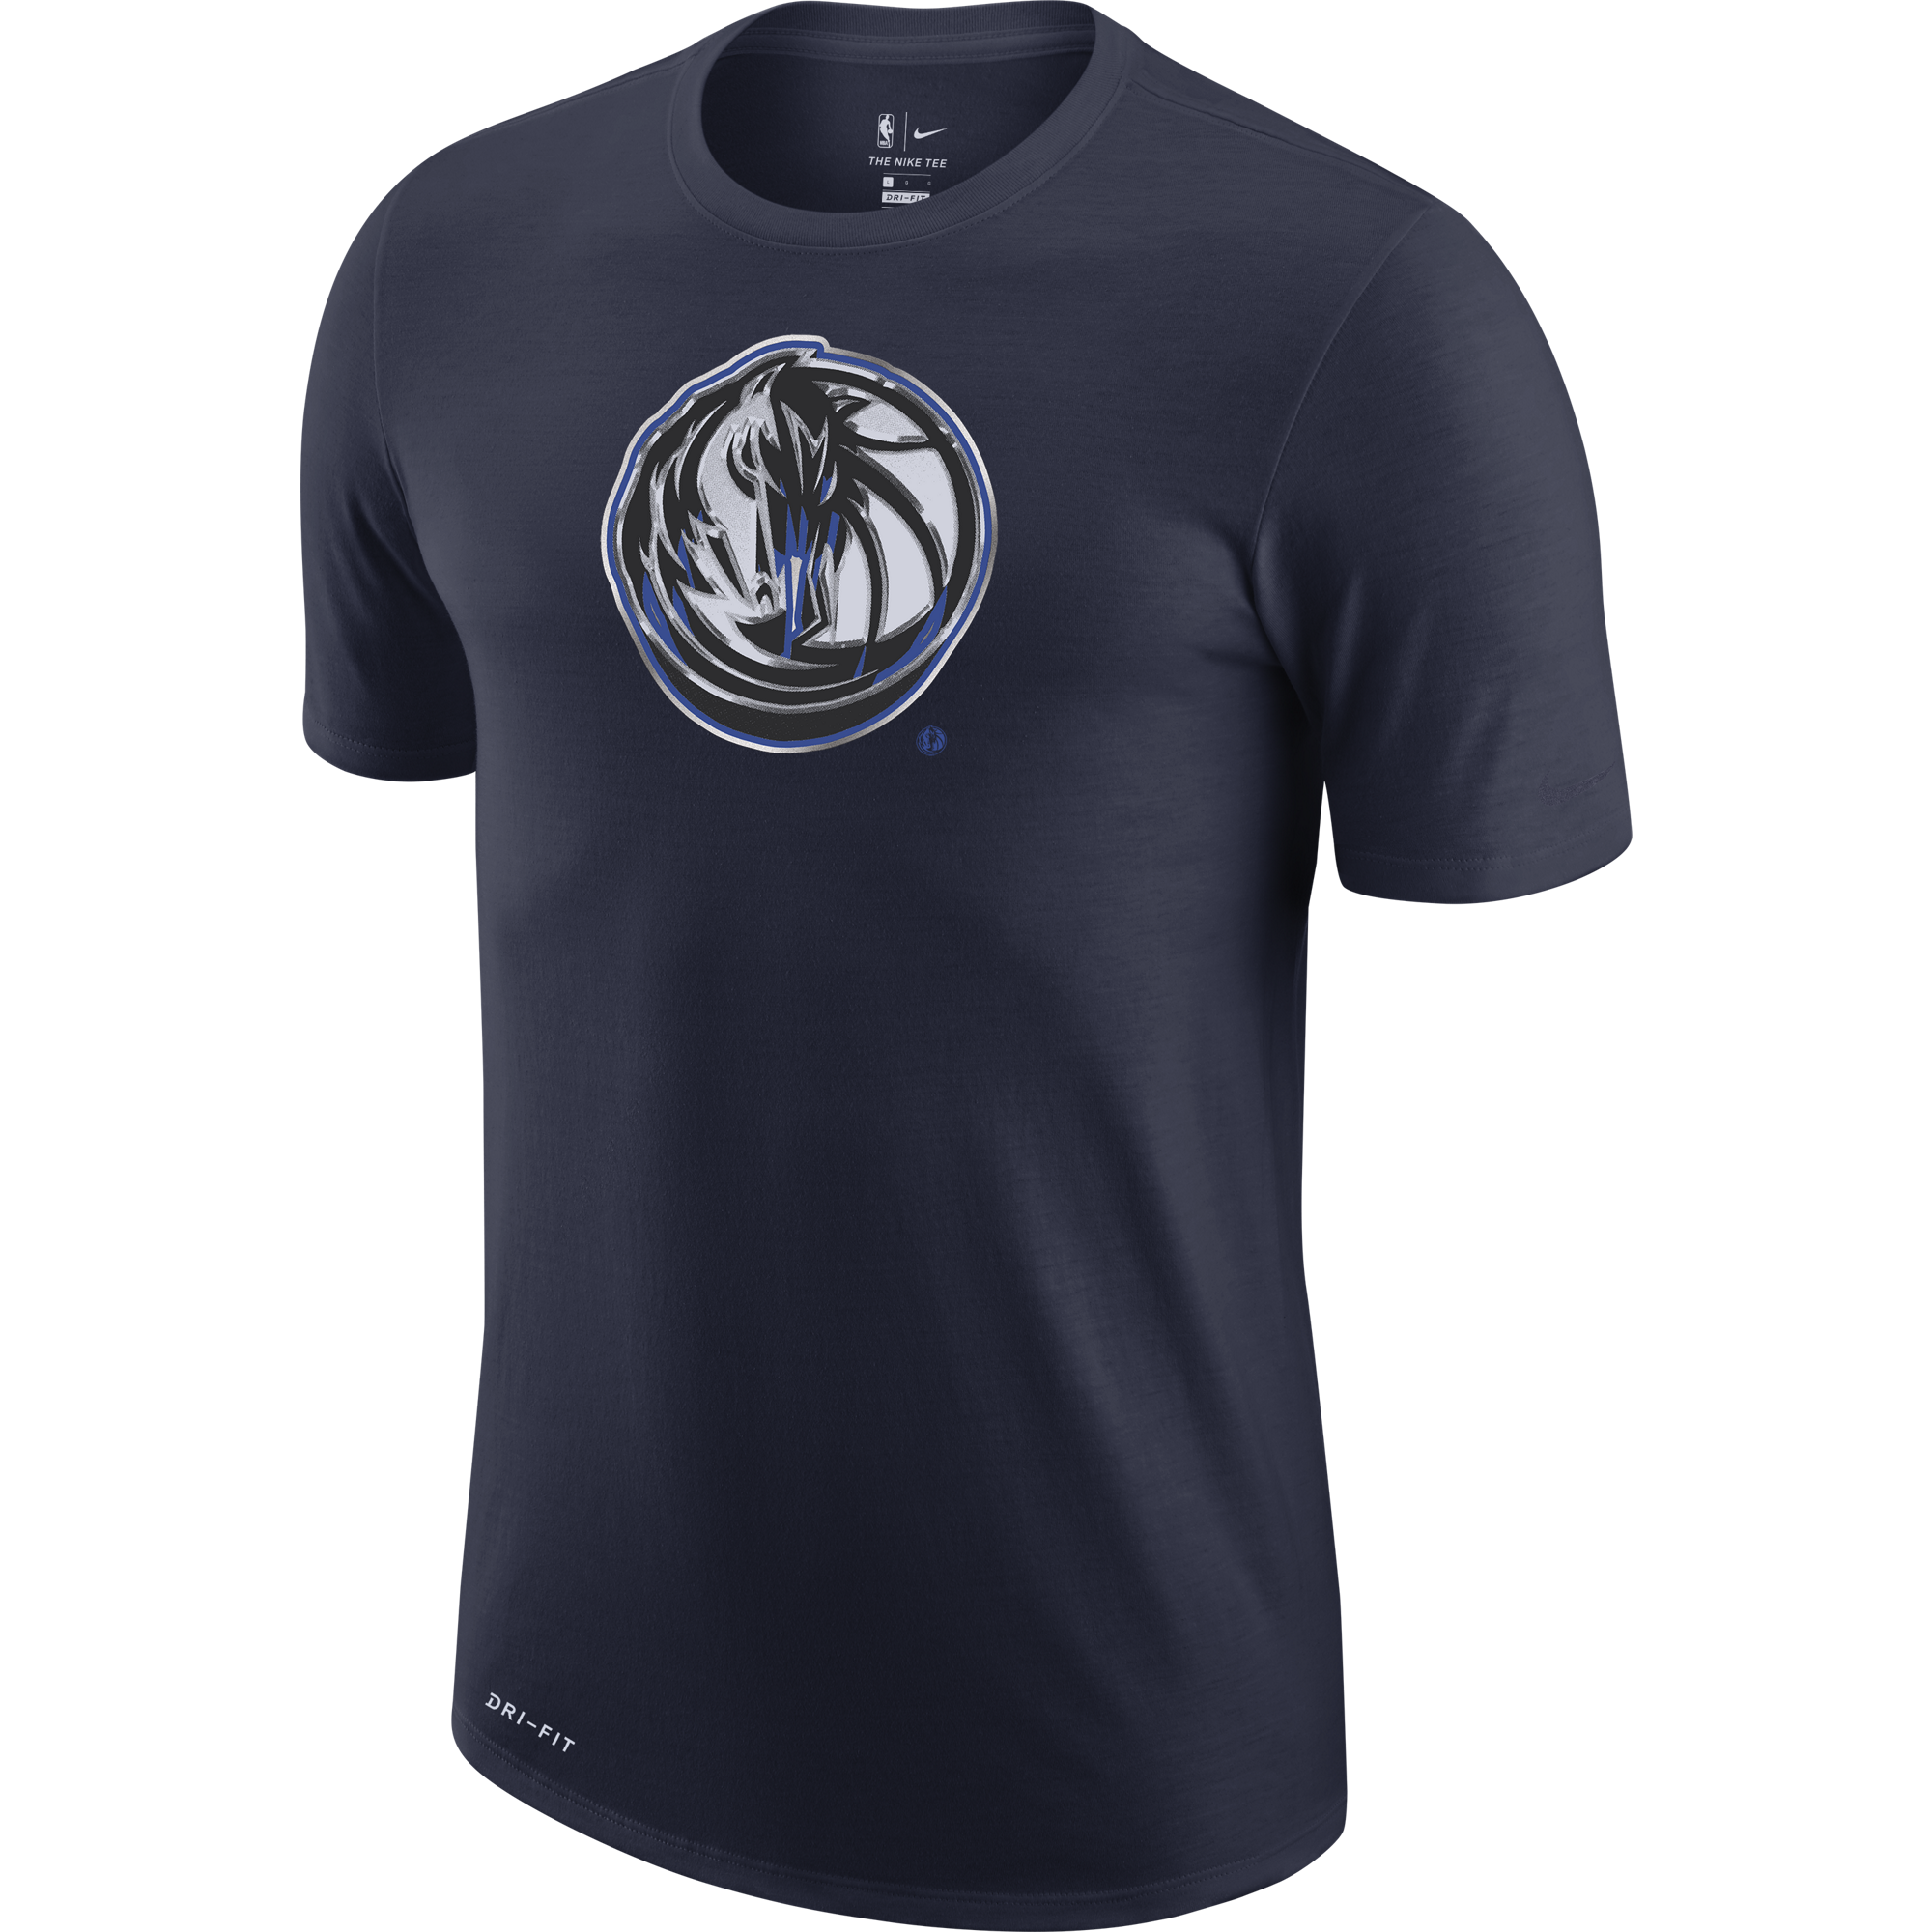 Nike Earned Edition Jersey: Dallas Mavericks